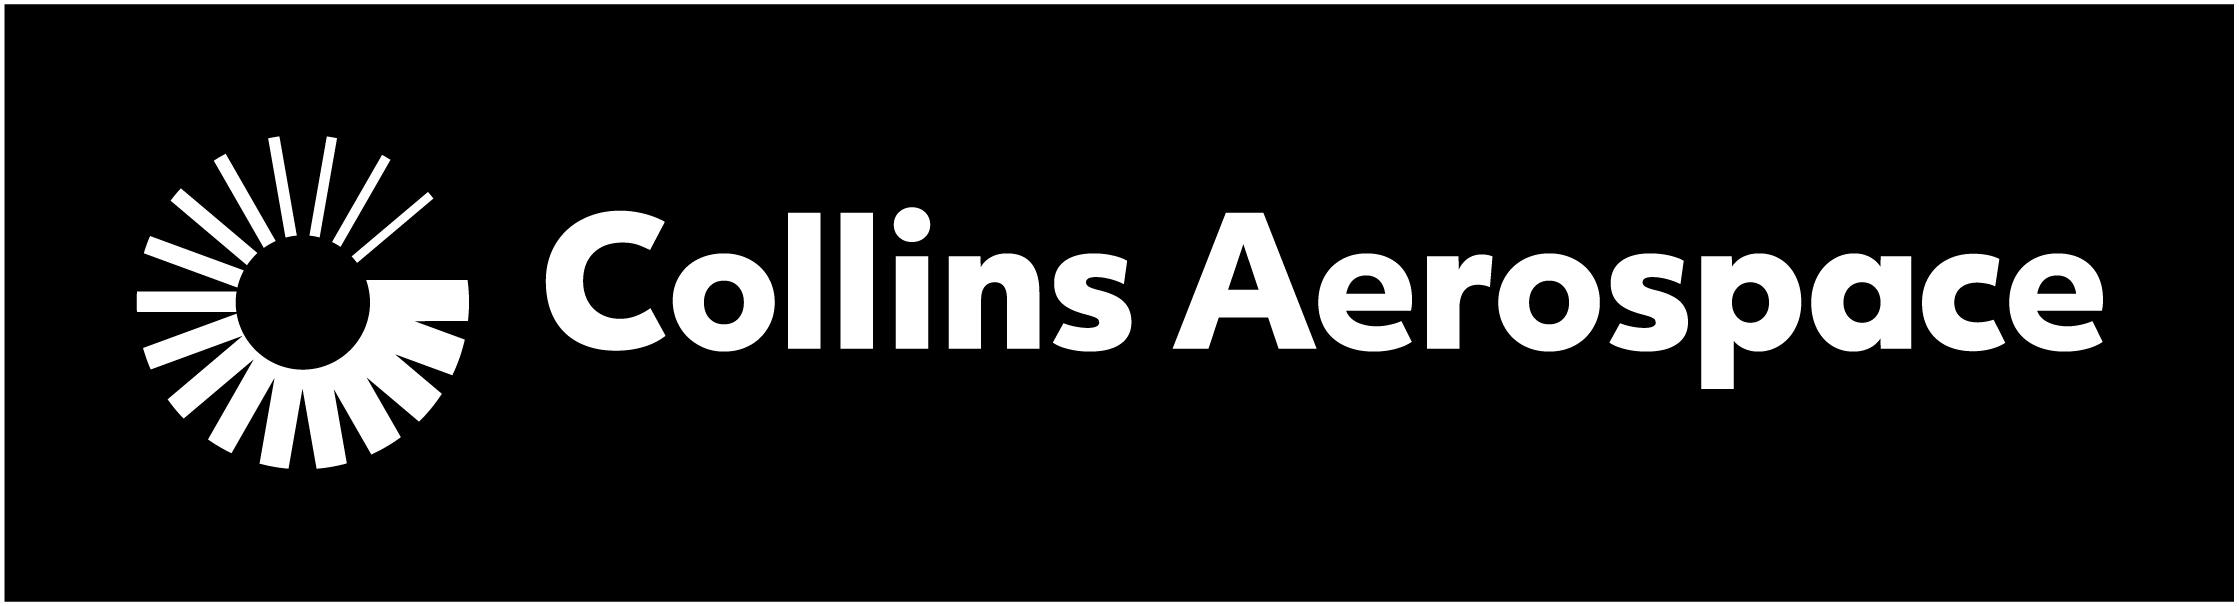 Collins AeroSpace